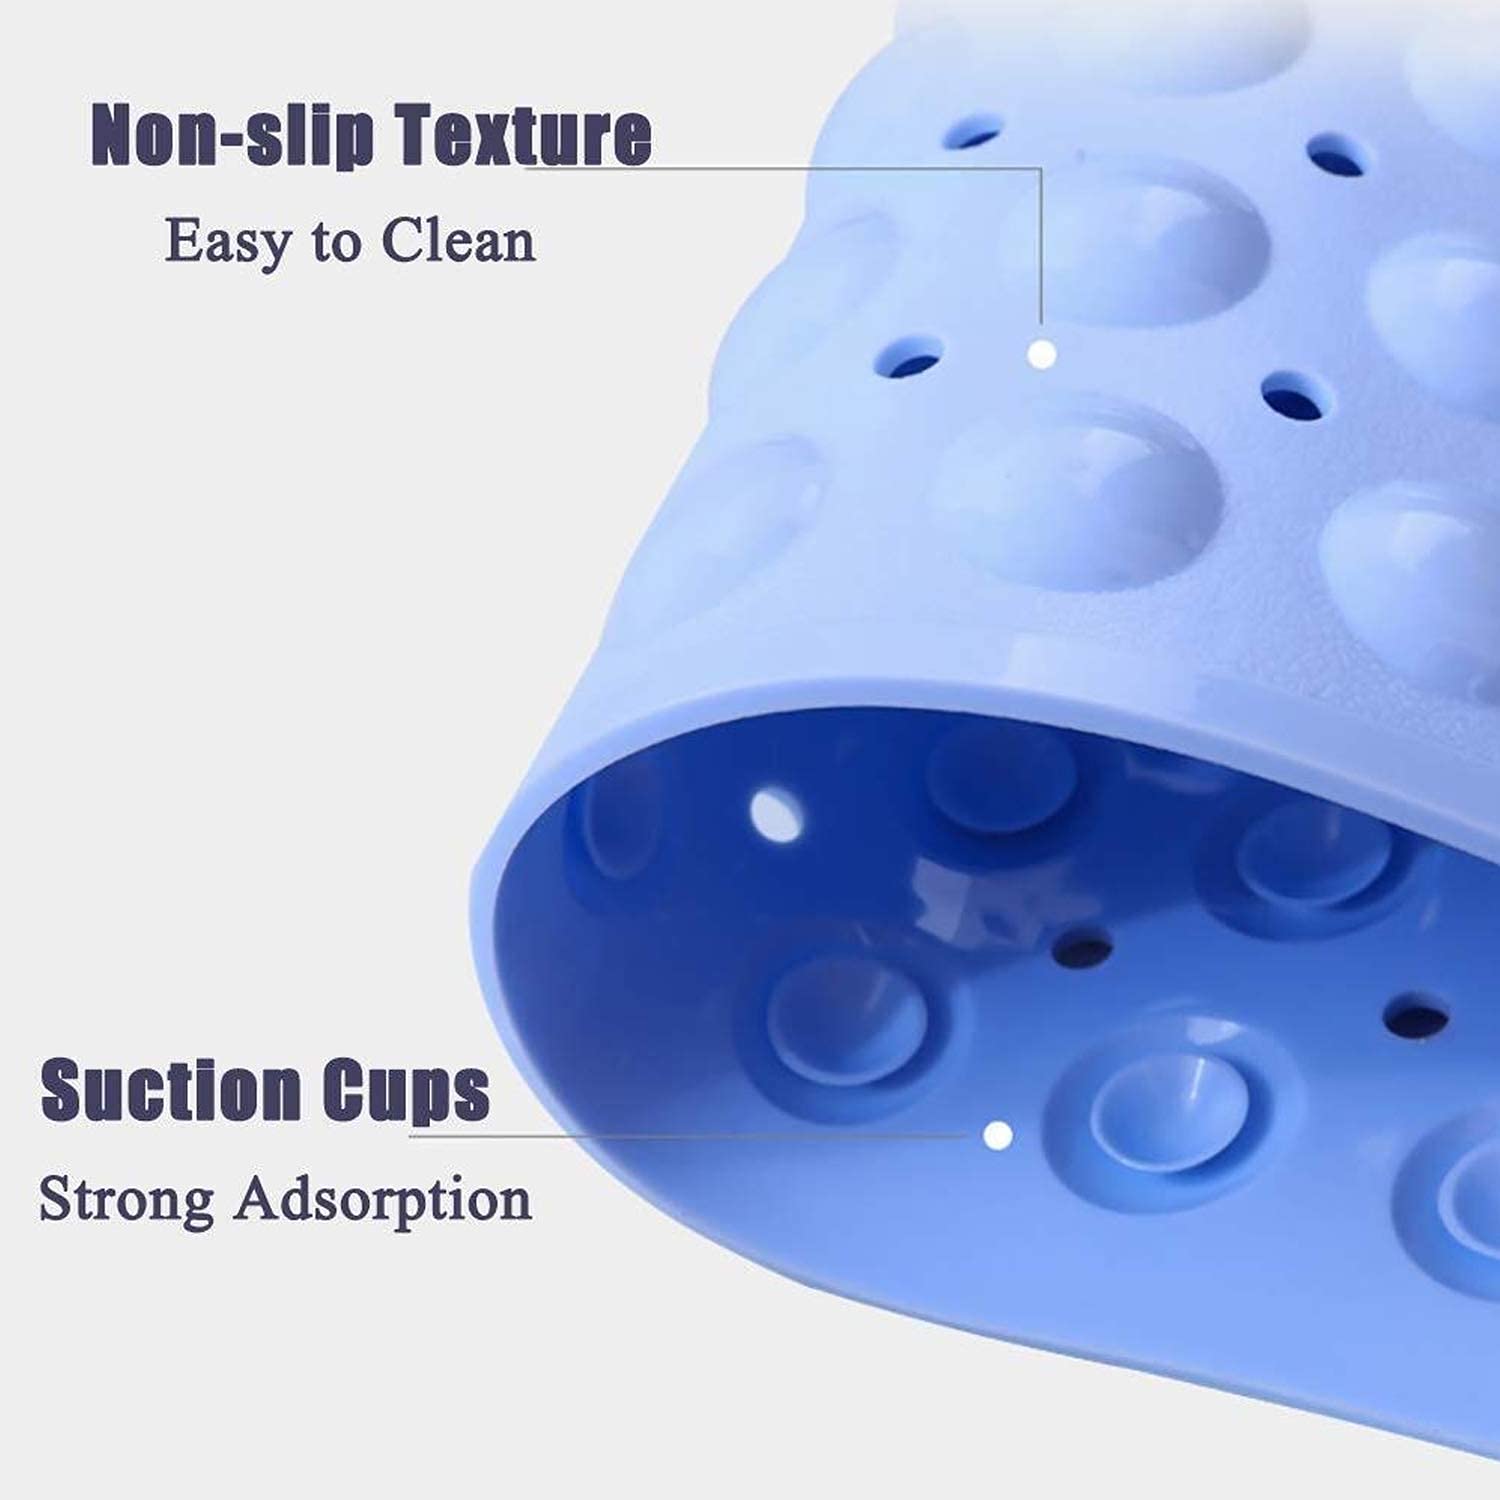 Anti-Slip Shower Mat for Bathroom Floor Blue, 80x120 cm (Soft-Pebble) LifeKrafts